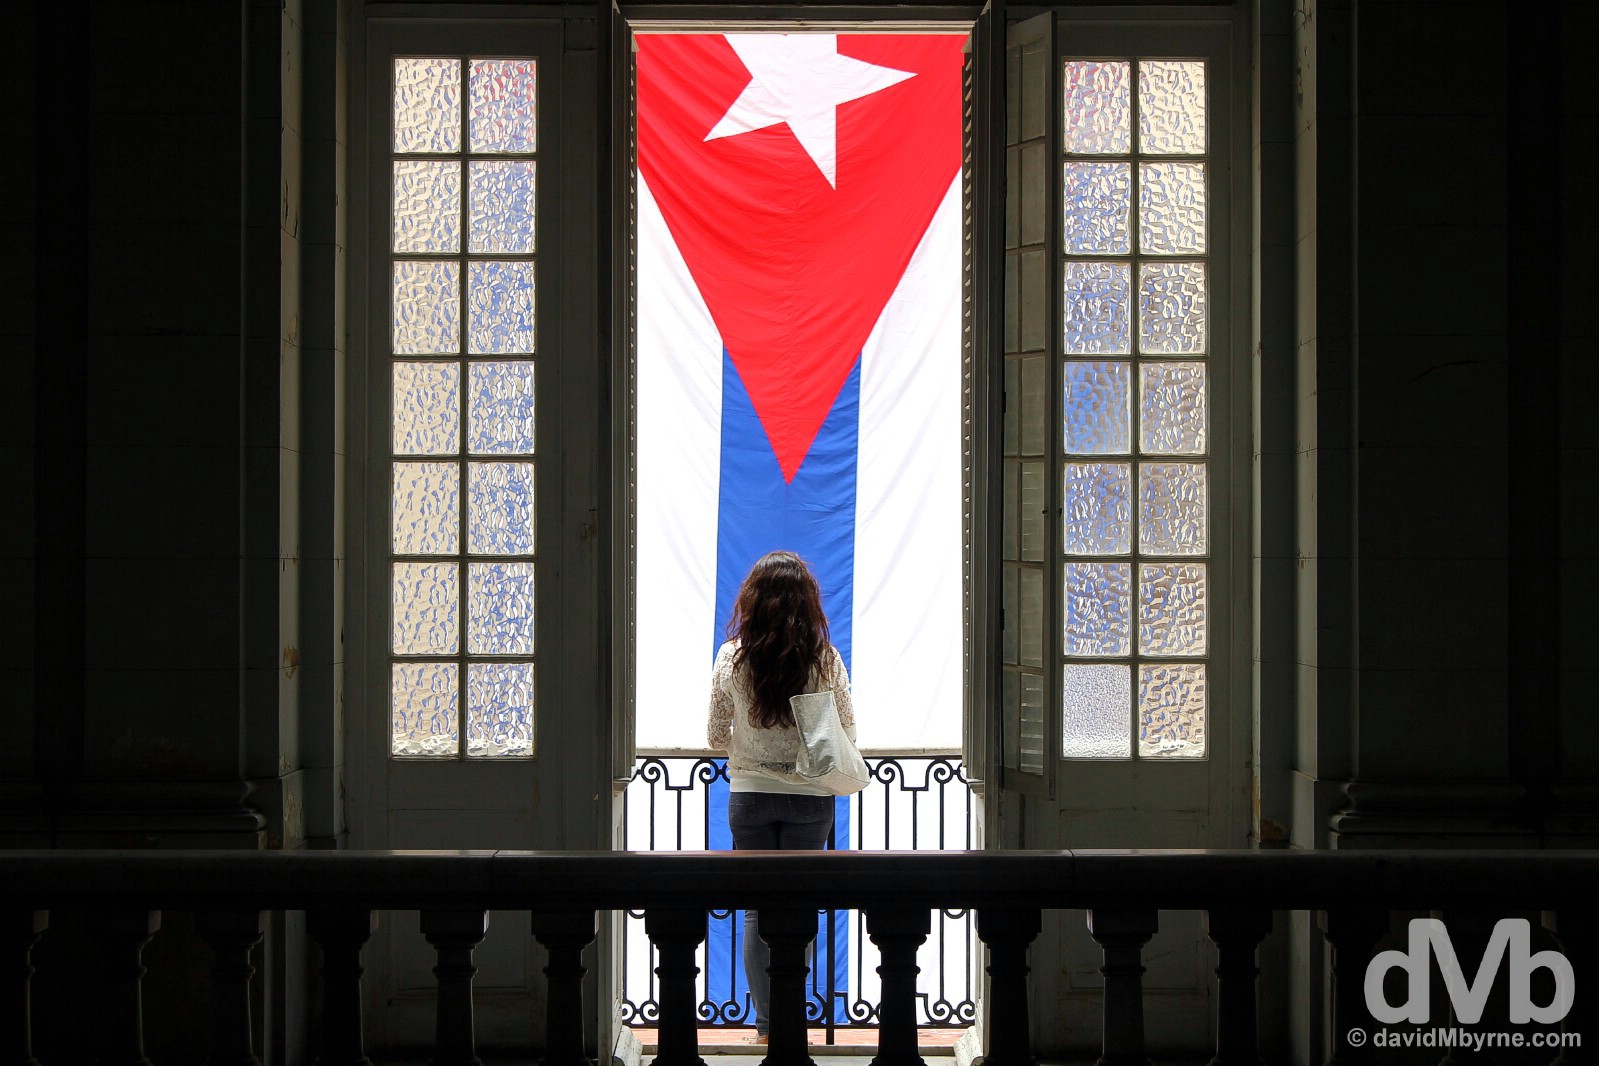 Museo de la Revolucion, The Museum of the Revolution, Havana, Cuba. May 2, 2015.